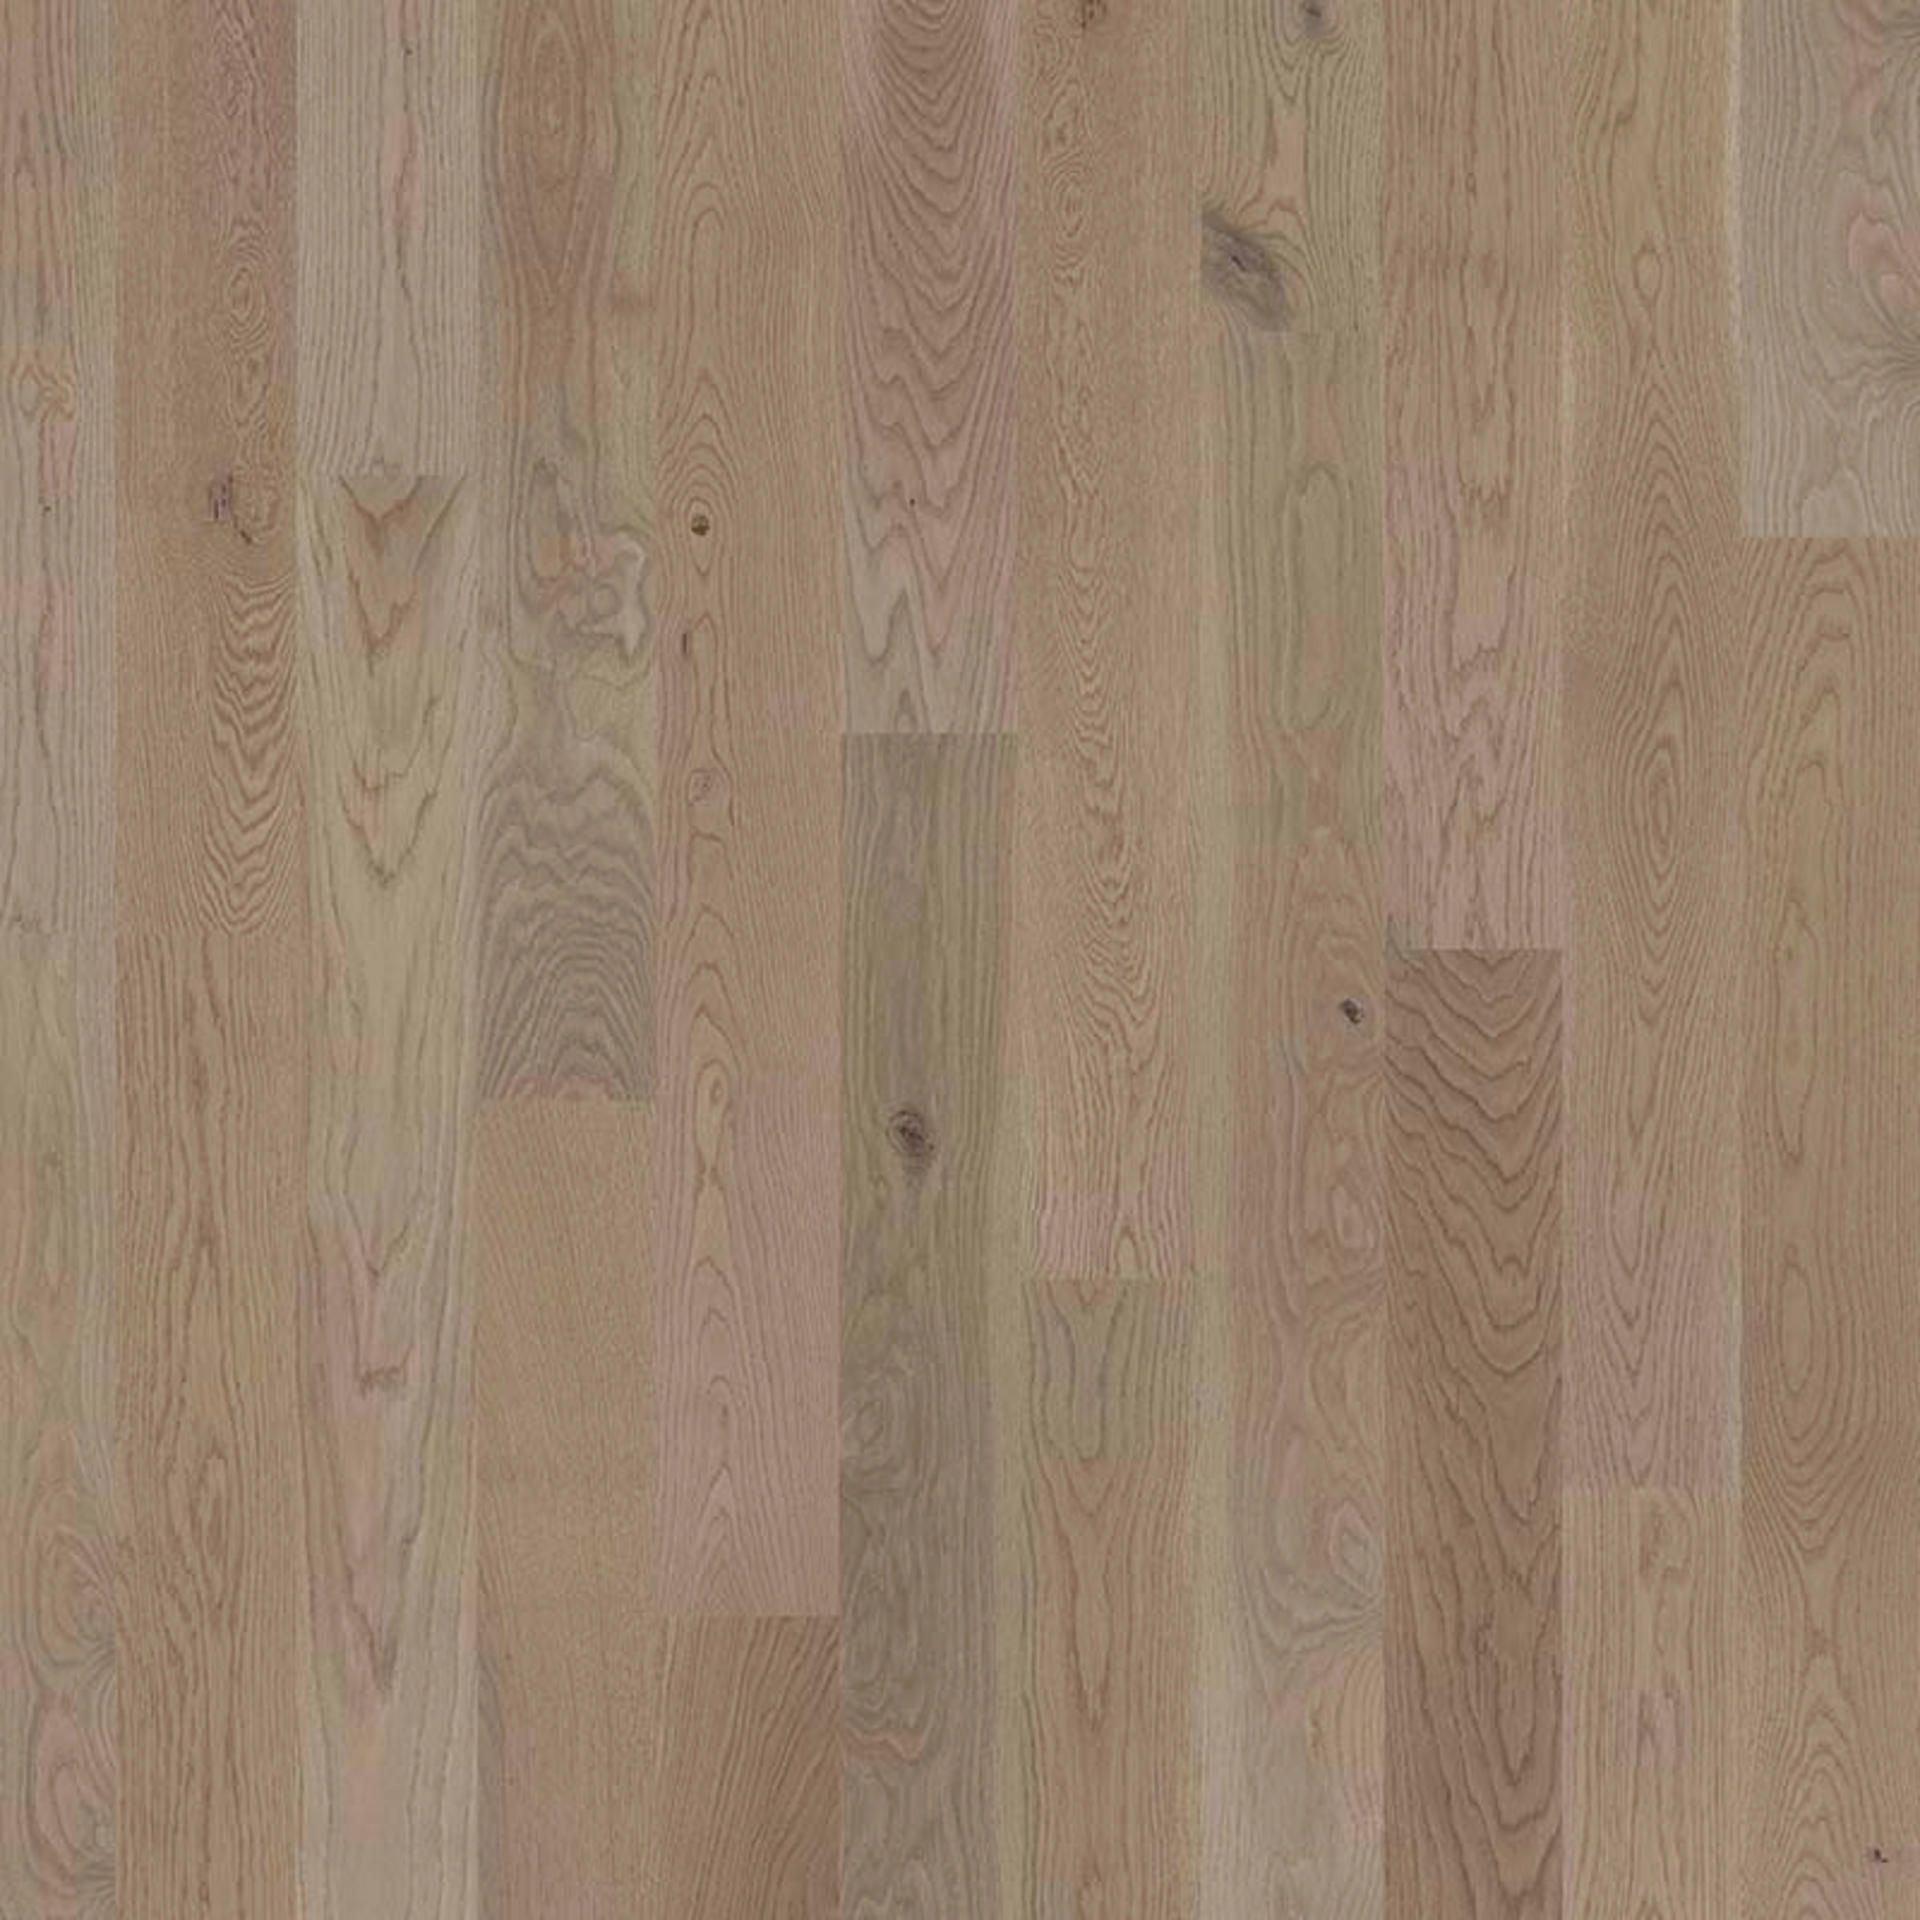 Holzboden Eiche Soft Grey gebürstet 1 Stab MADRID-TB15 Planke 162 x 2000 mm